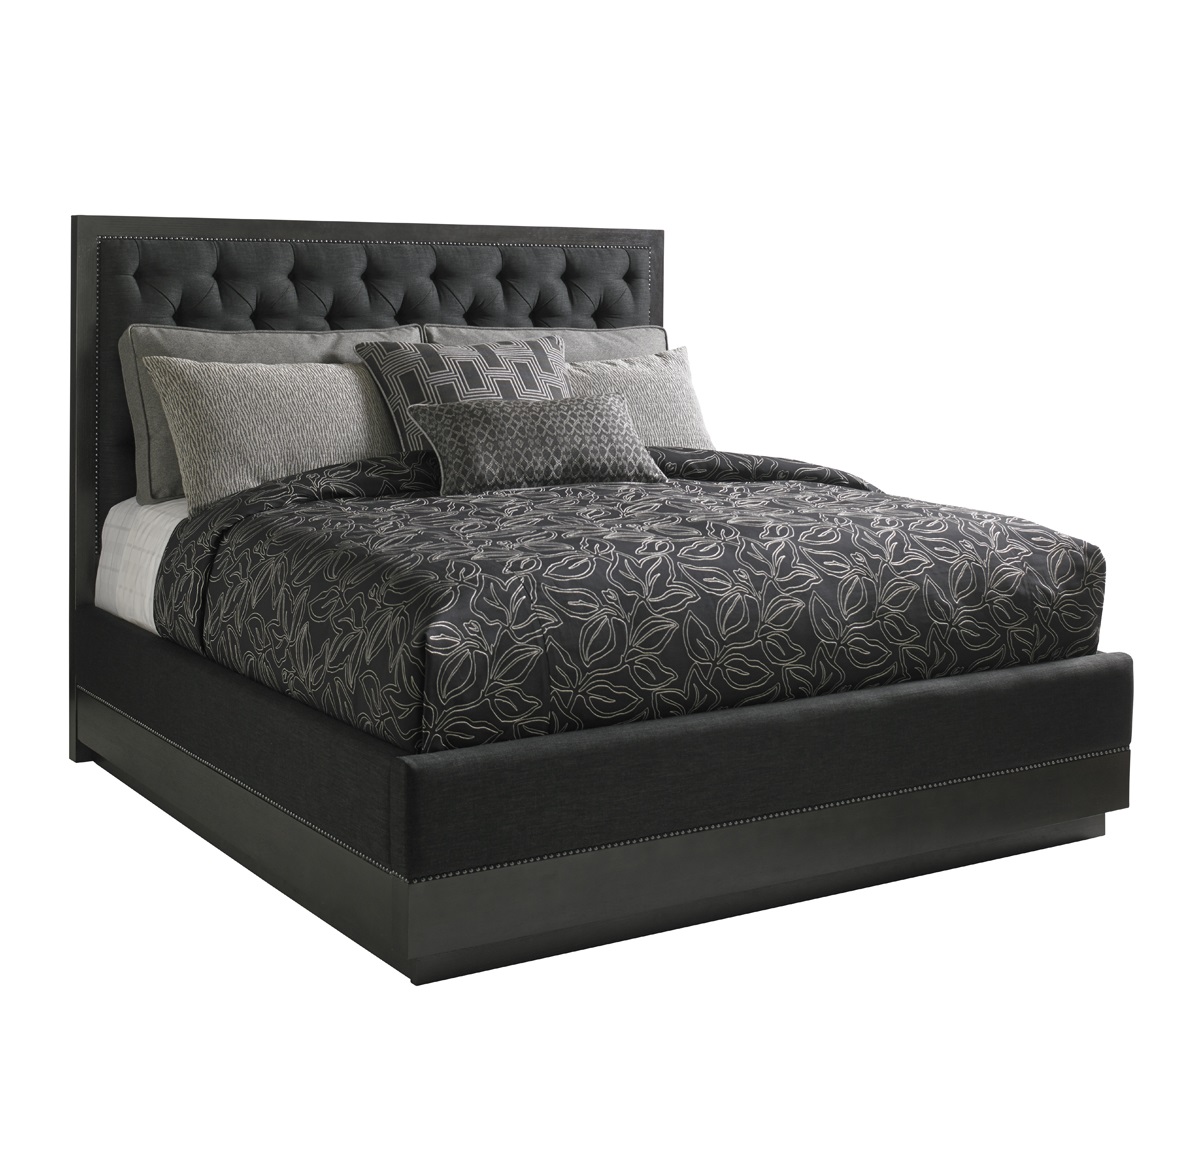 Carrera Maranello Bed, Lexington Contemporary Upholstered Headboard Bed